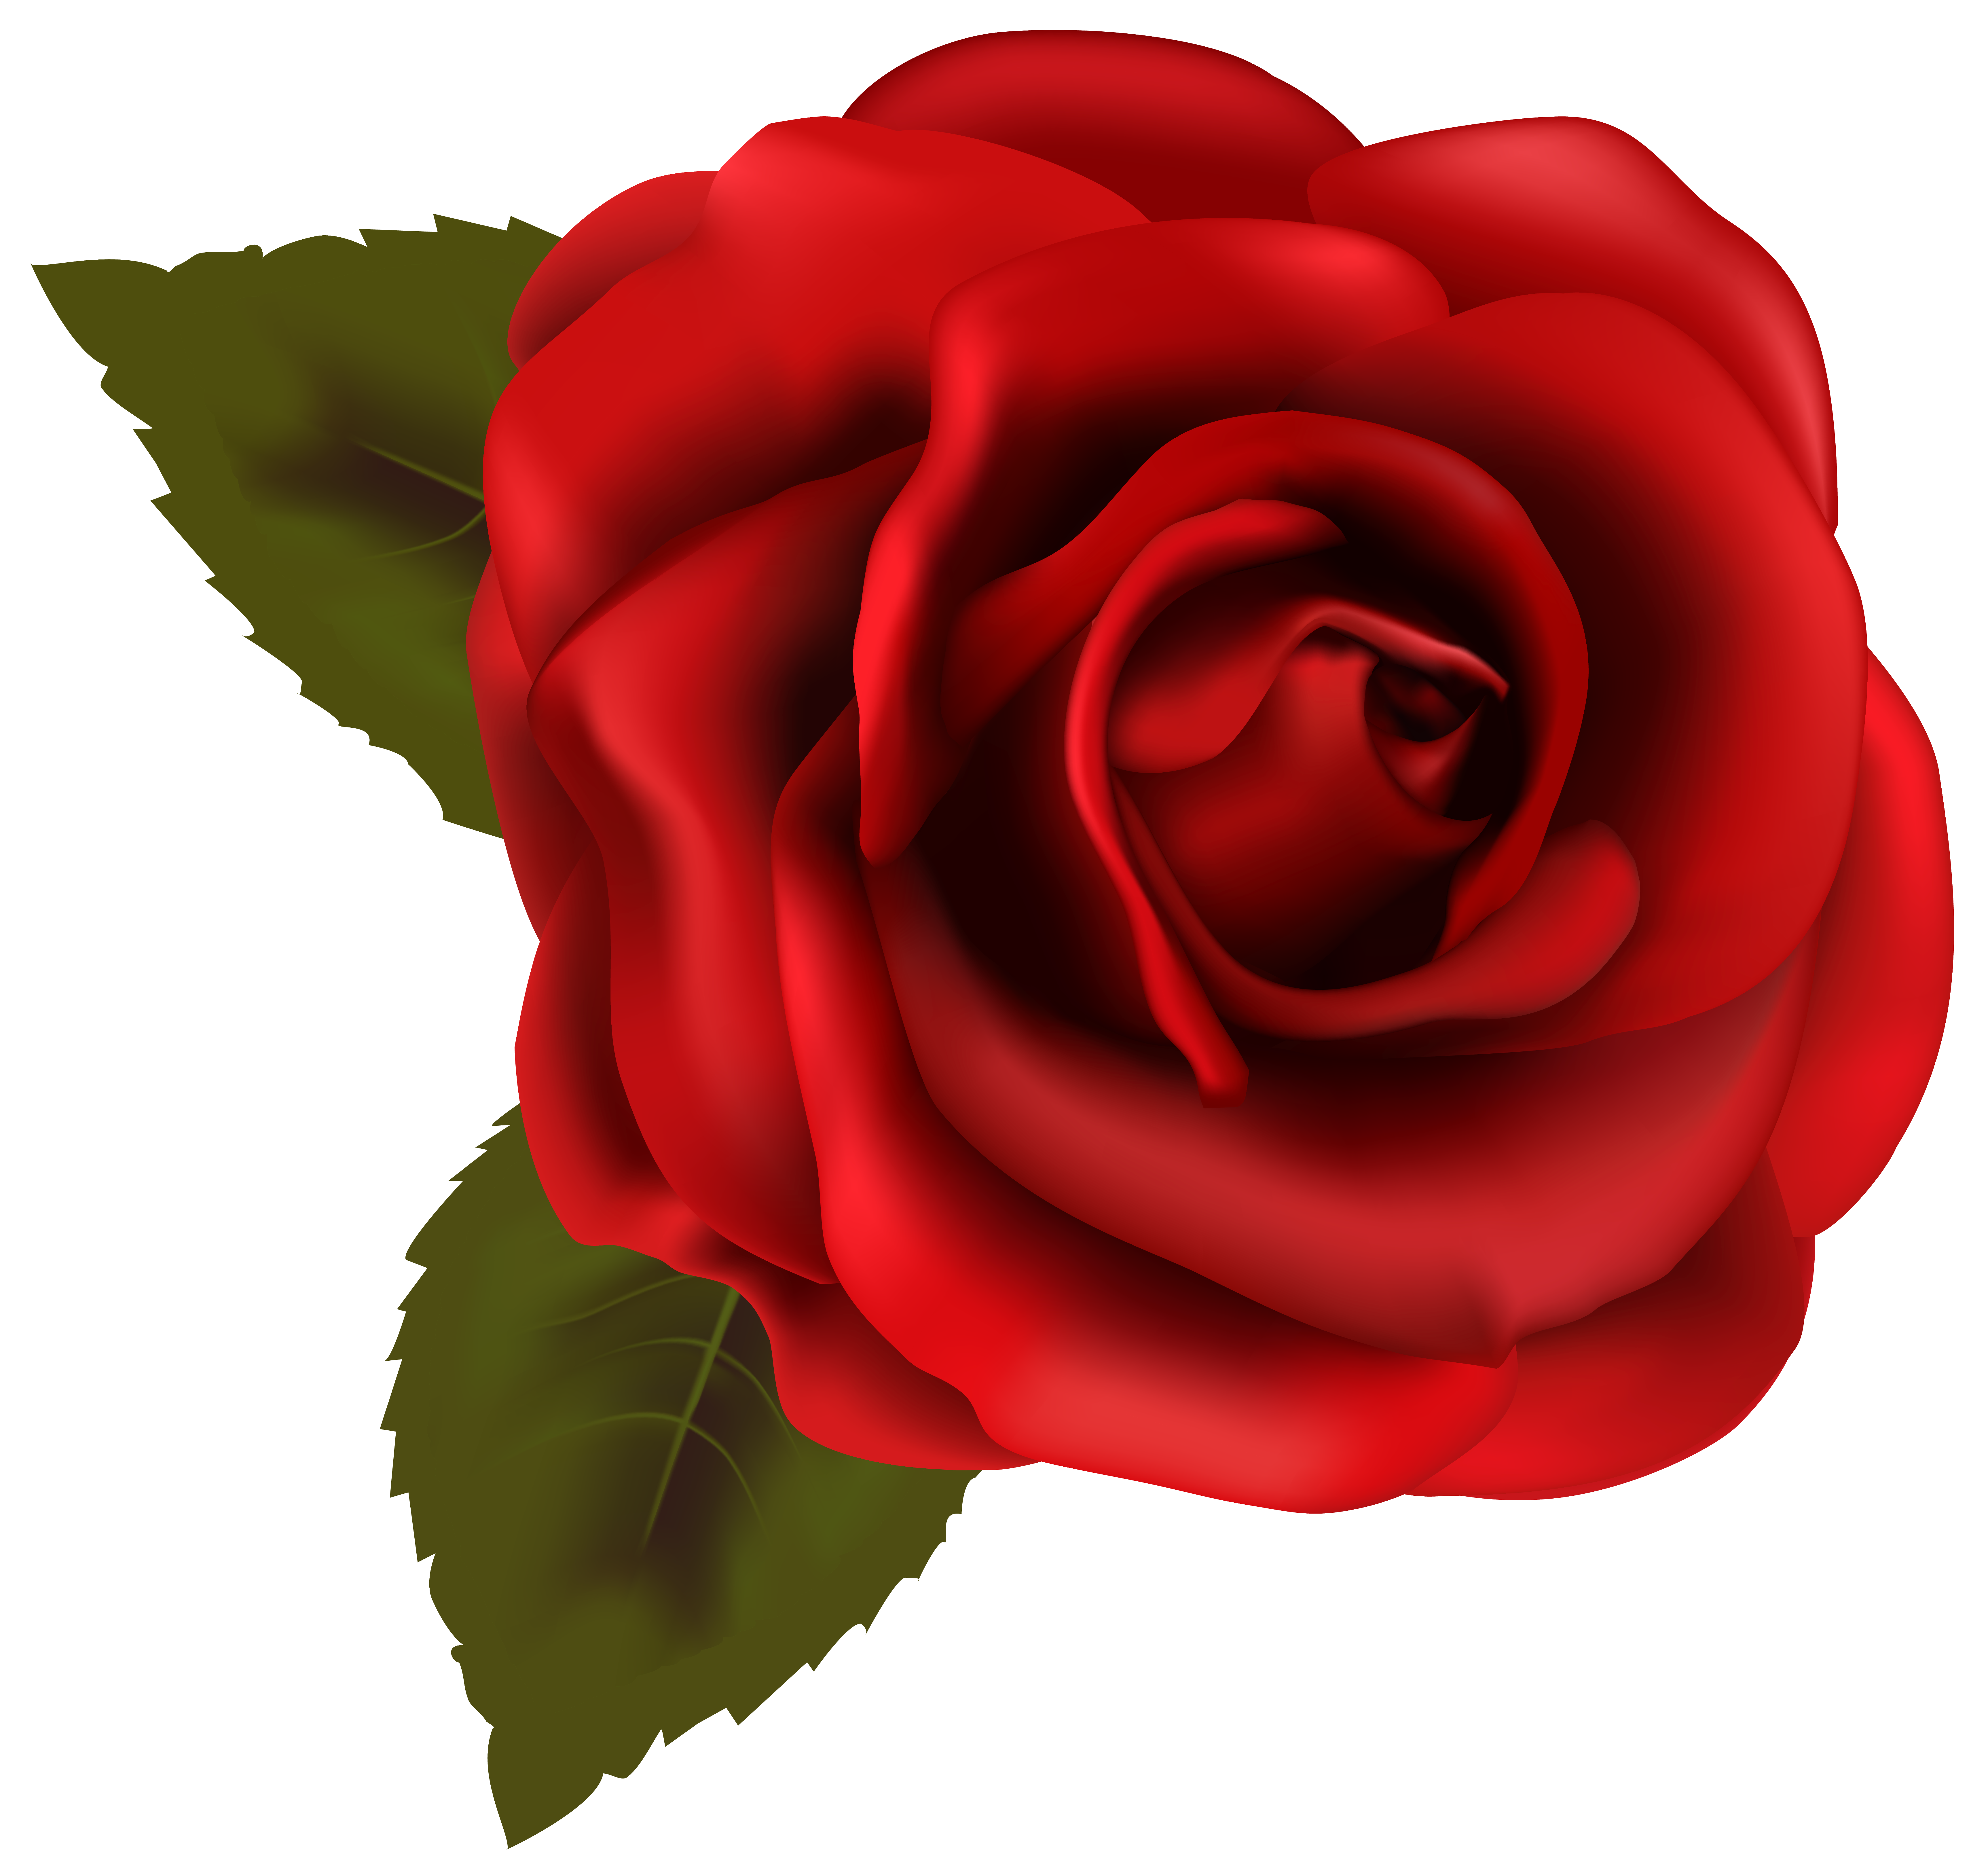 Beautiful Red Rose Transparent PNG Clip Art Image.